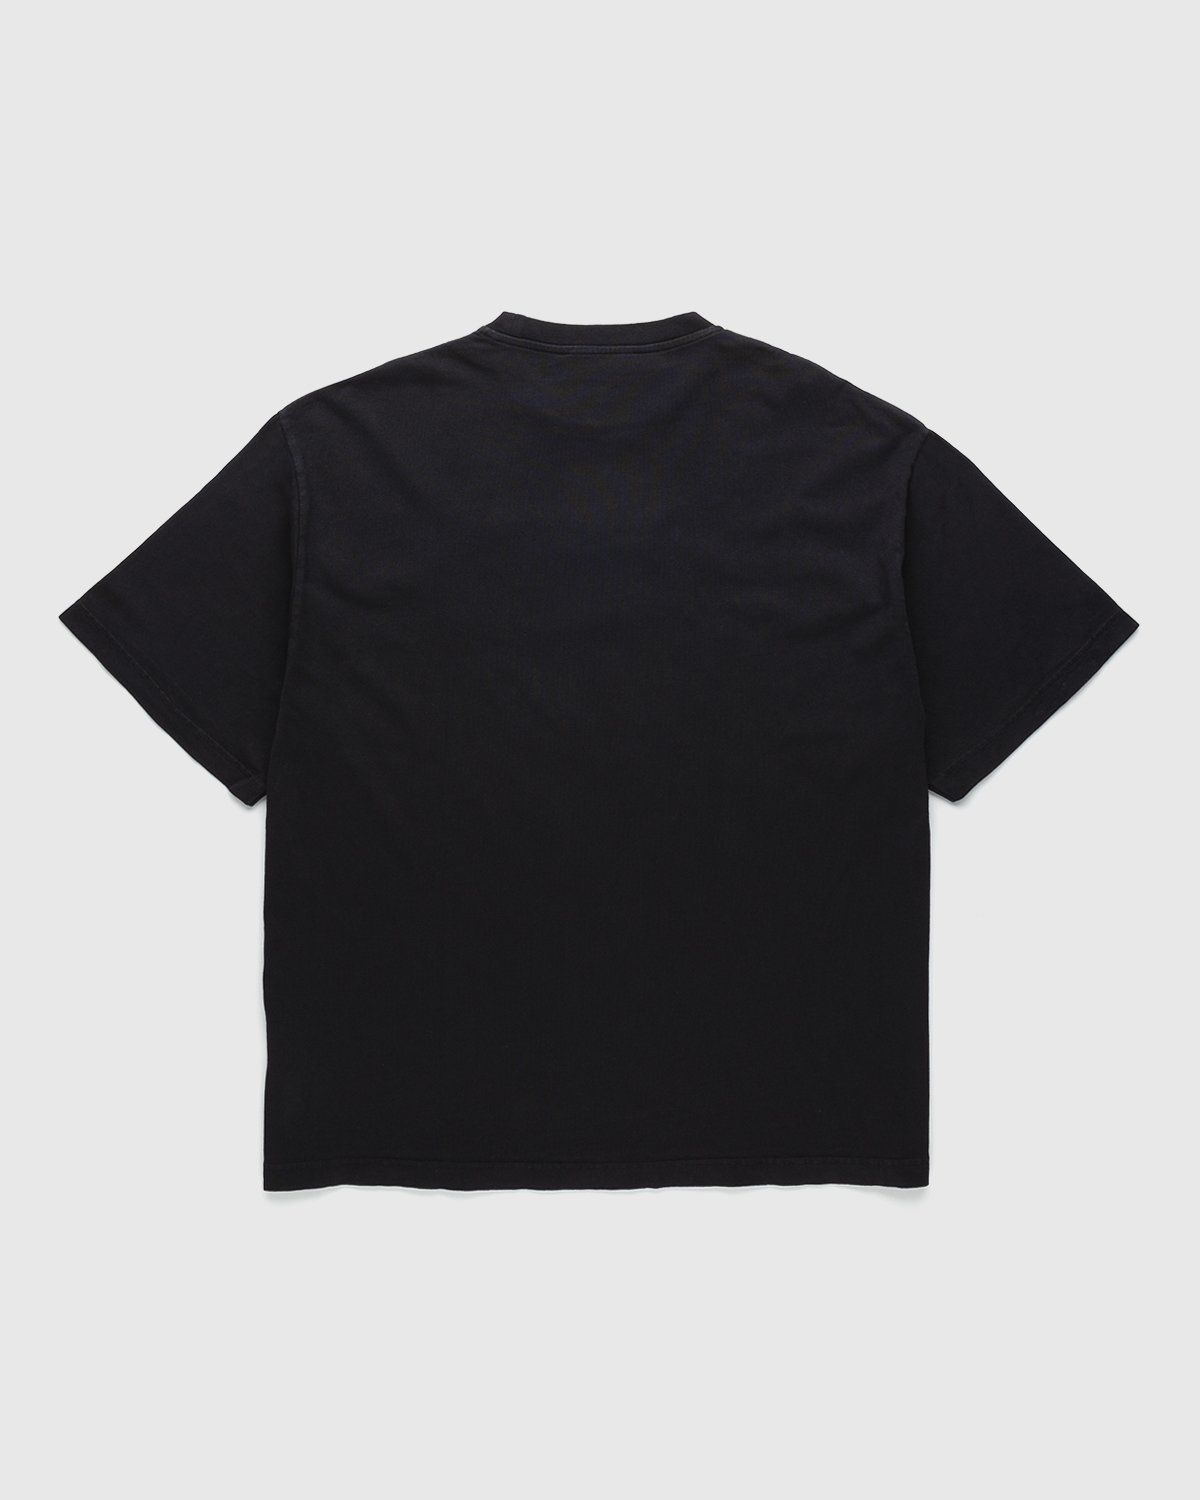 Acne Studios – Cotton Logo T-Shirt Black - Tops - Black - Image 2